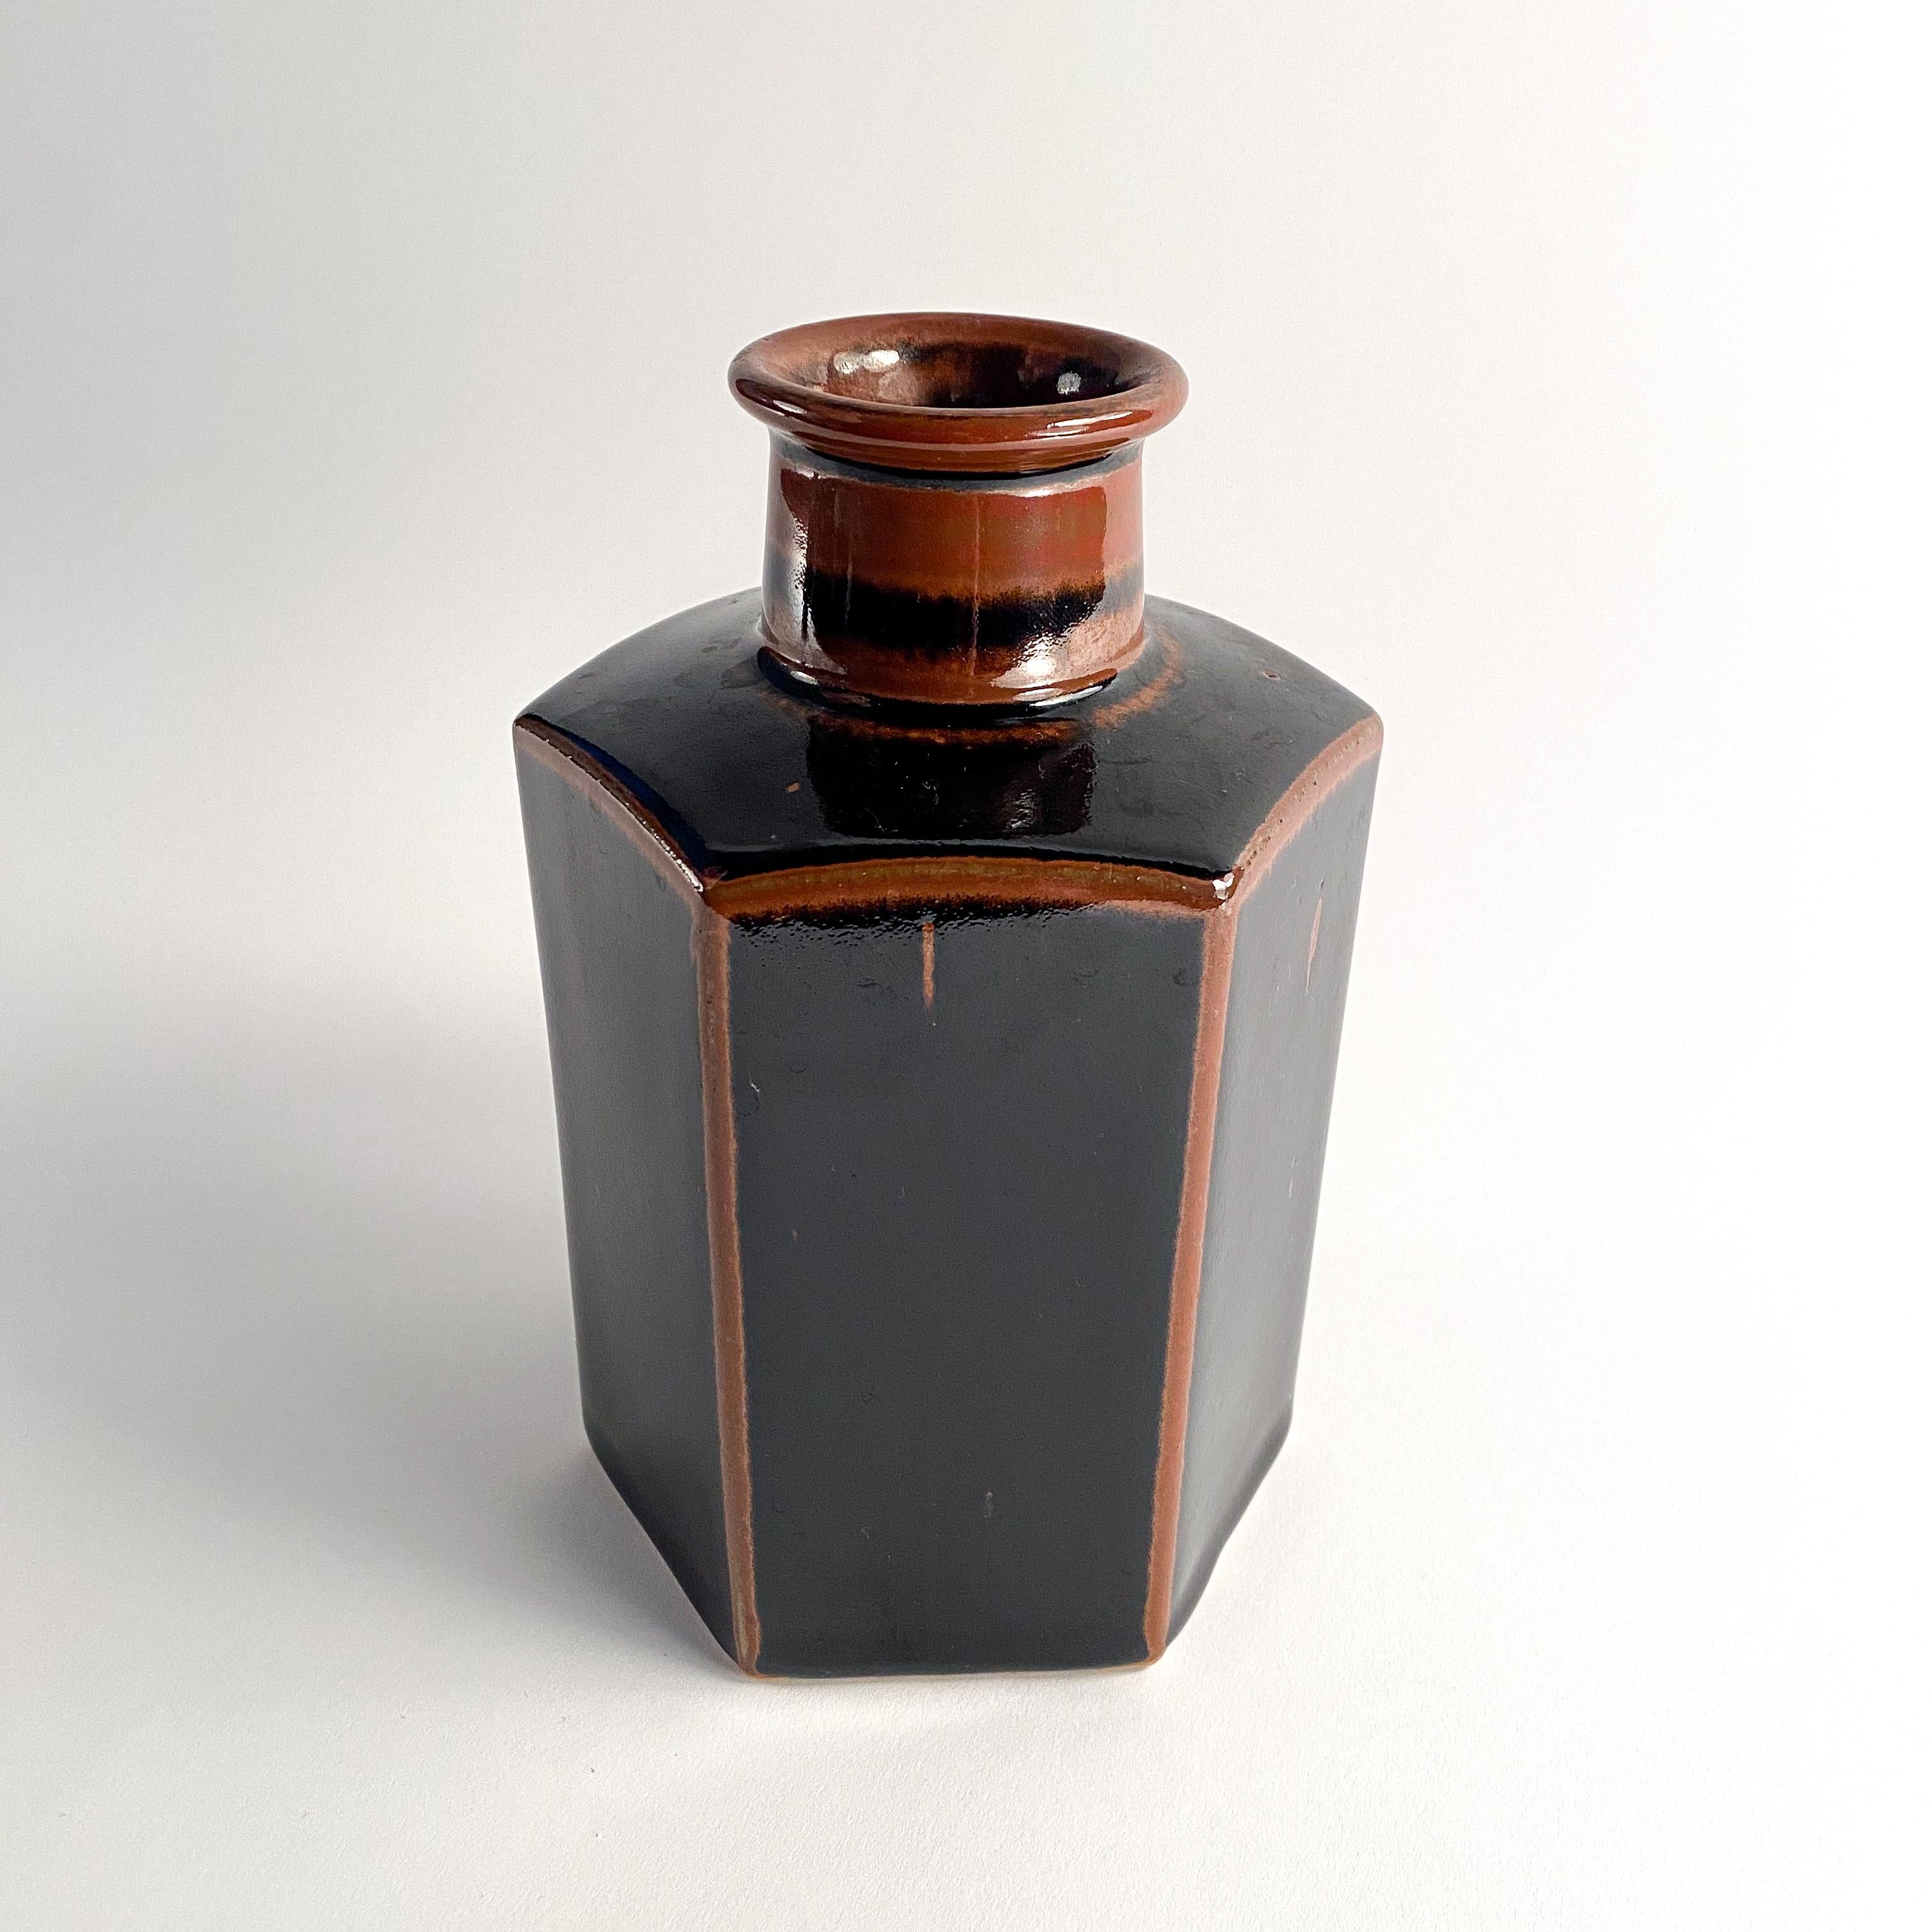 Hexagonal vase by Dansk. Designed by Niels Refsgaard for Dansk. Black hexagon stoneware vase glaze with redish brown glaze accent. marked on underside